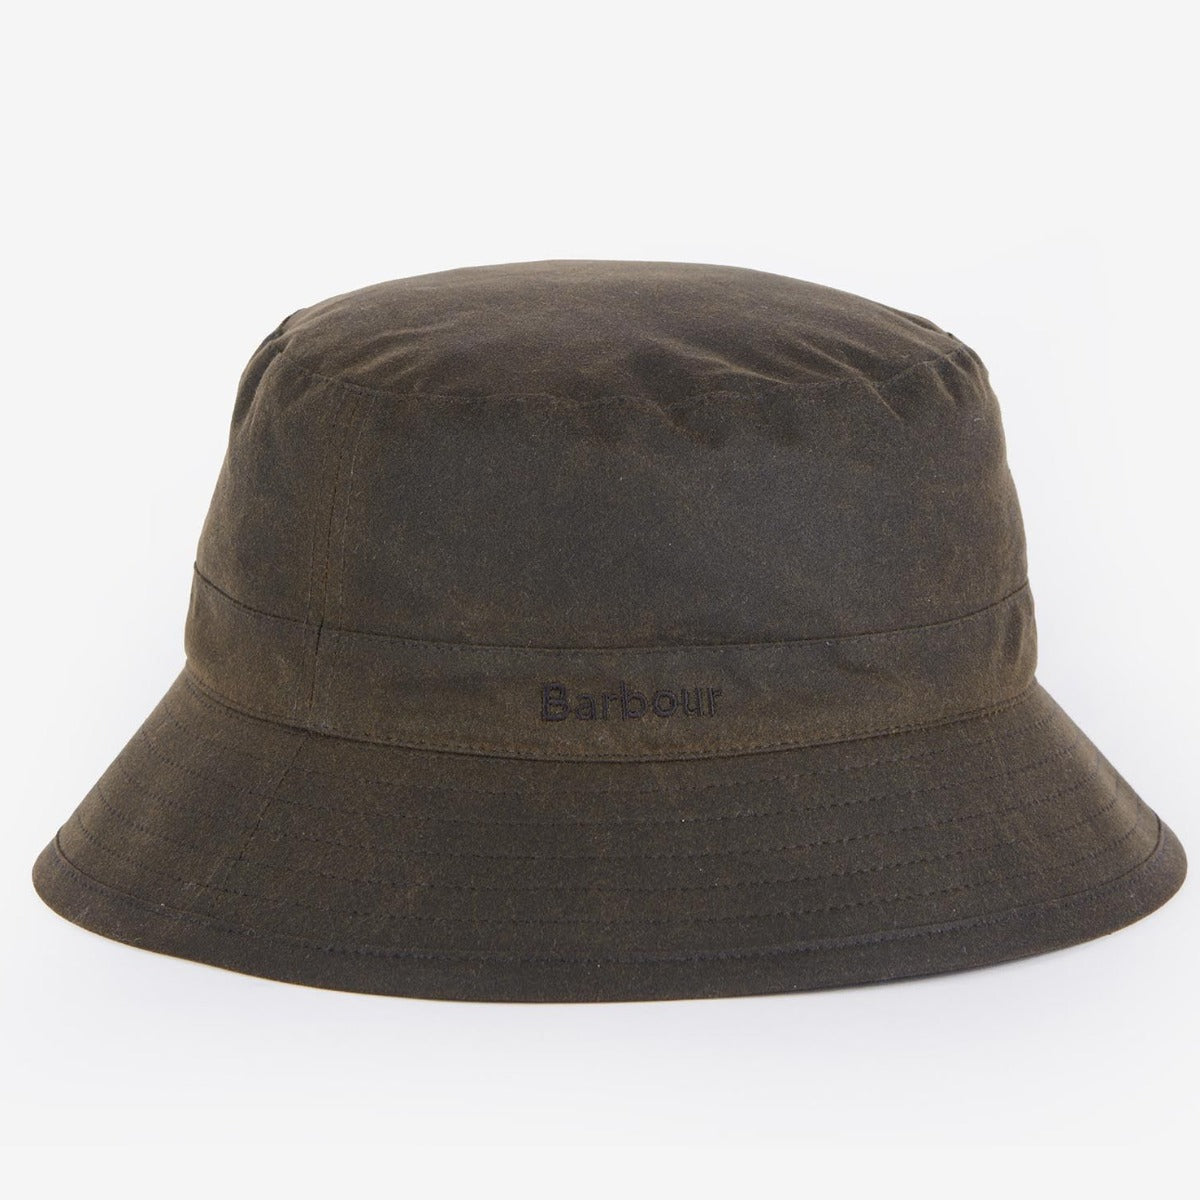 Barbour Wax Sports Hat - Navy - XL